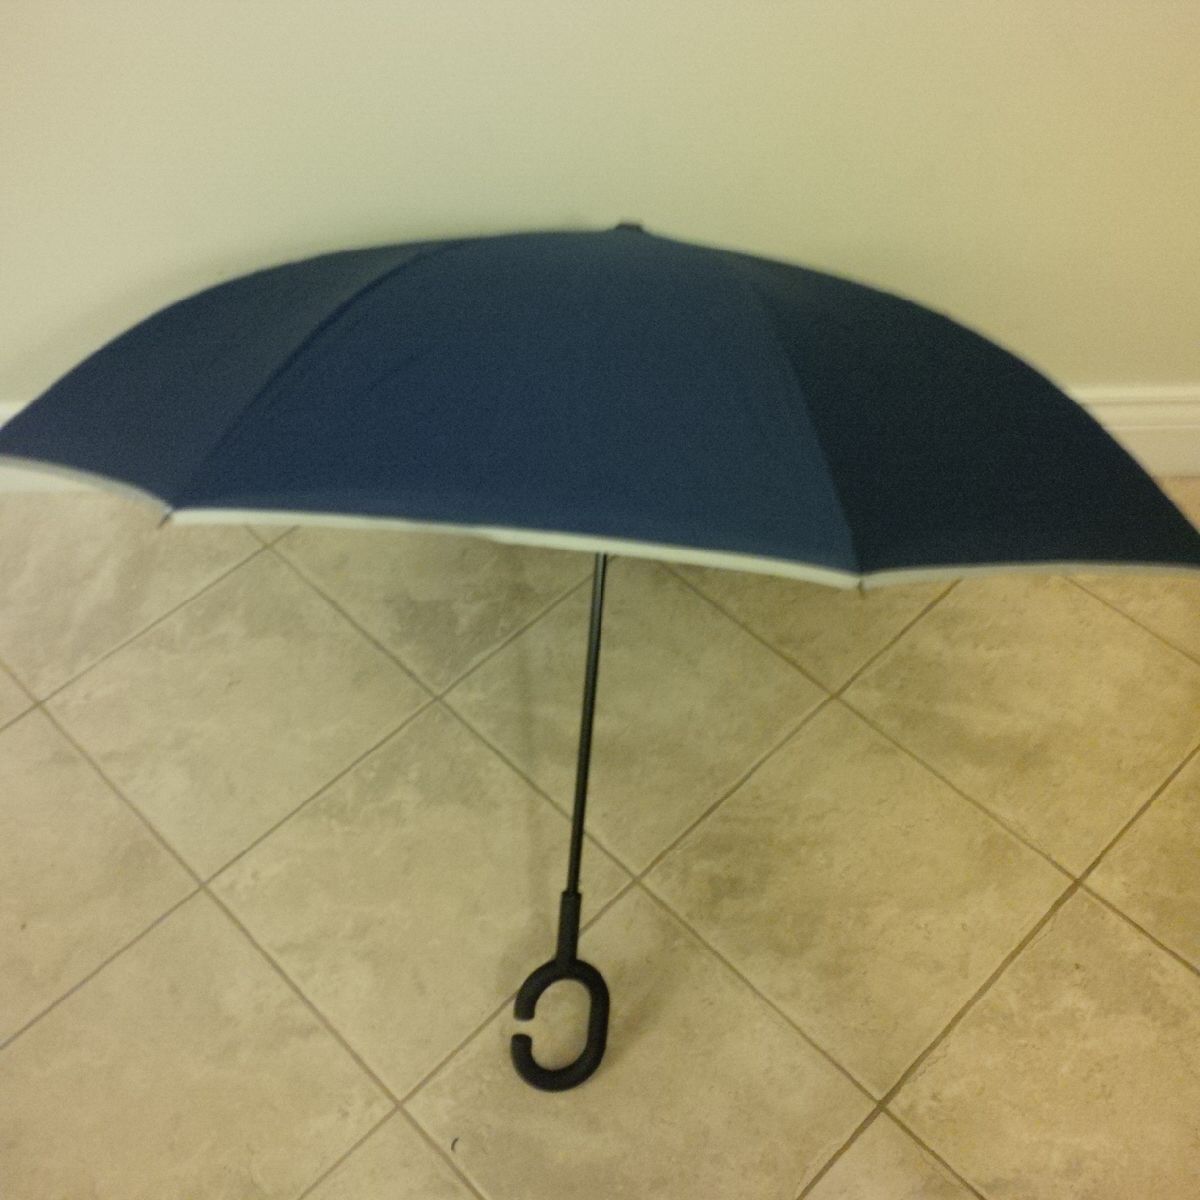 Standing umbrella